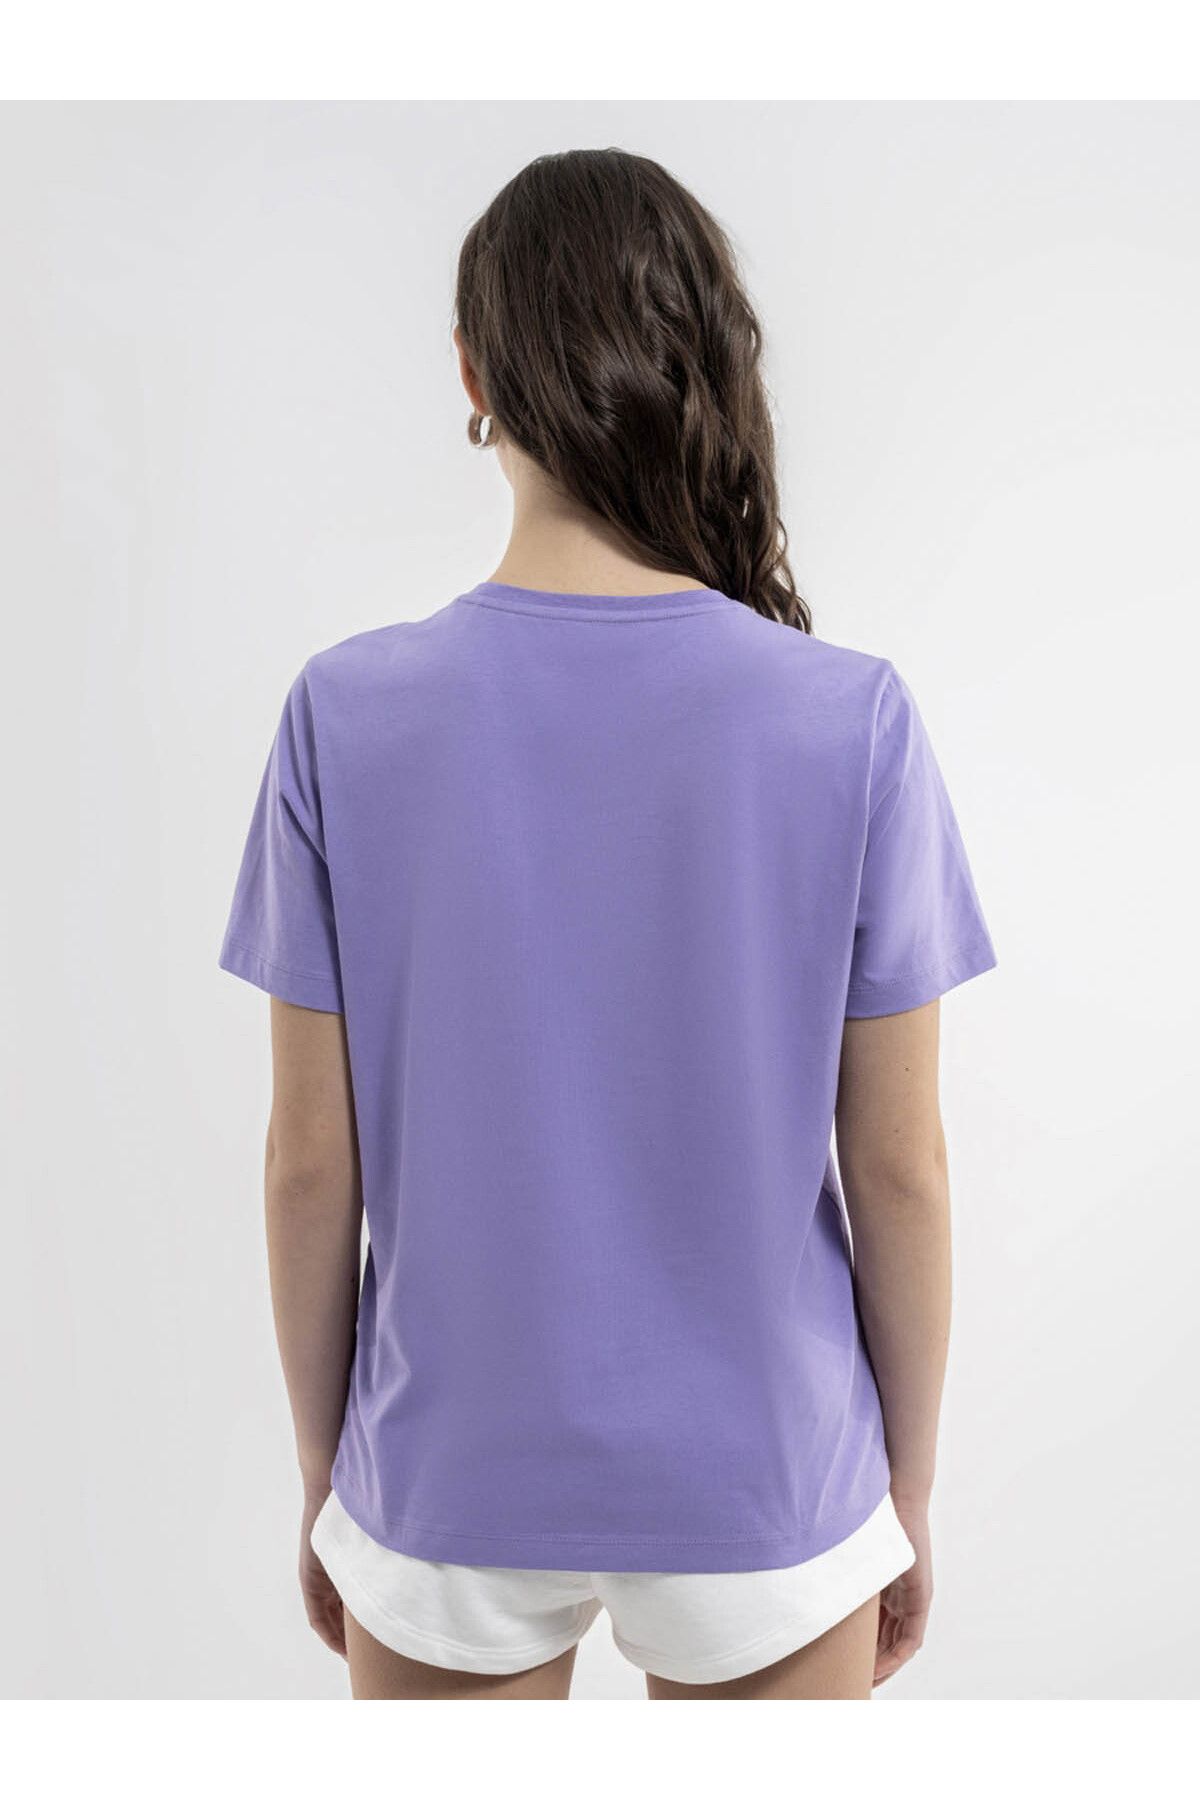 Loft Kadın T-shirt Mor Lf2033154